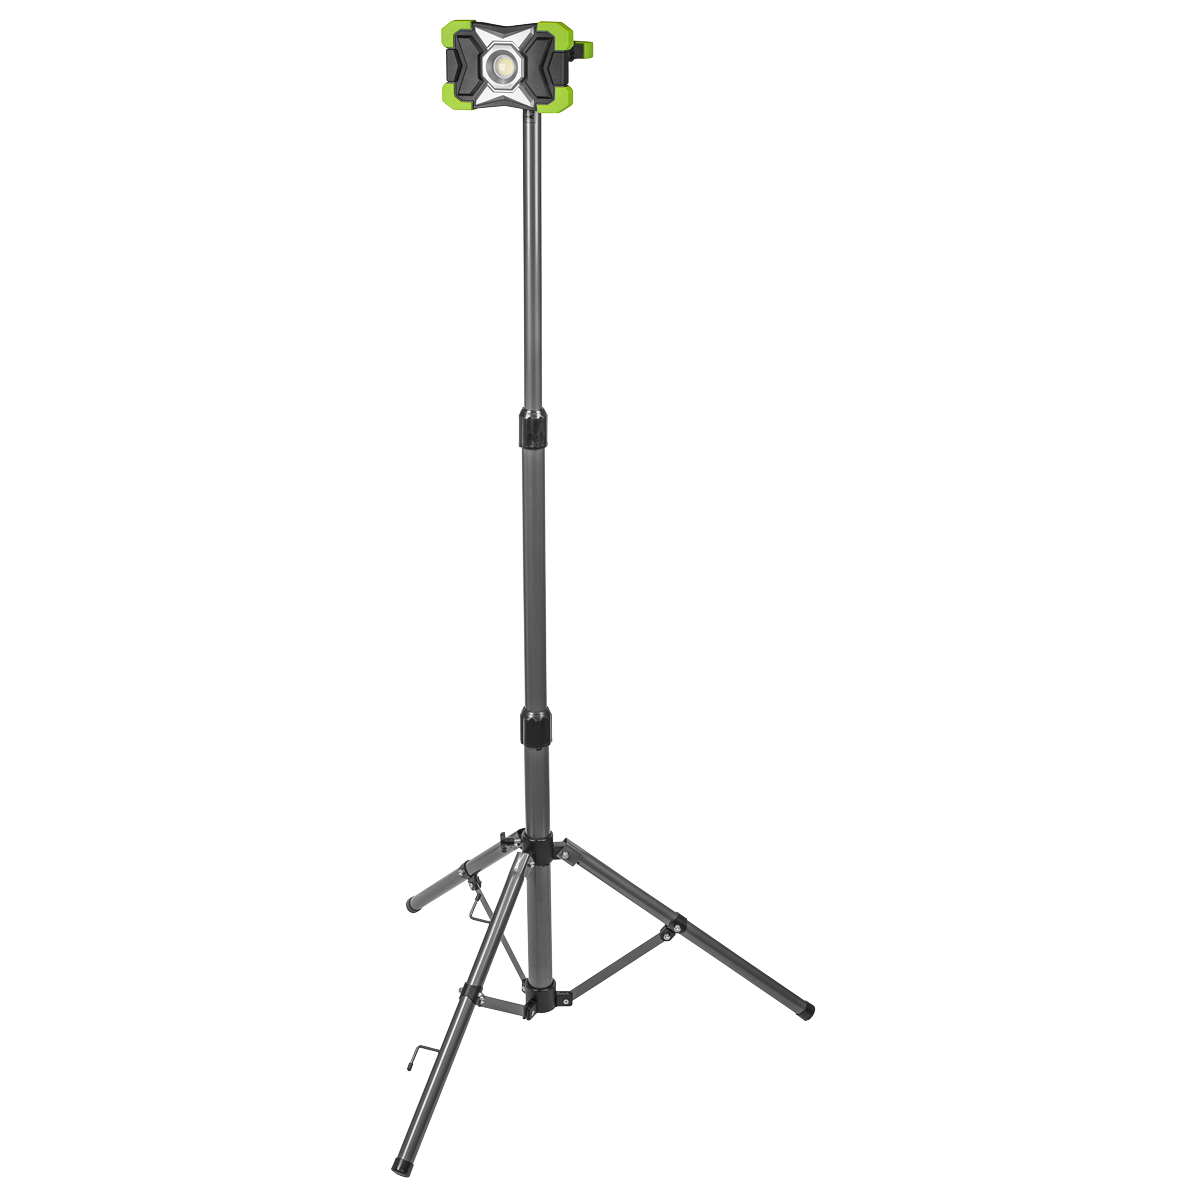 15W COB LED Portable Floodlight & Telescopic Tripod